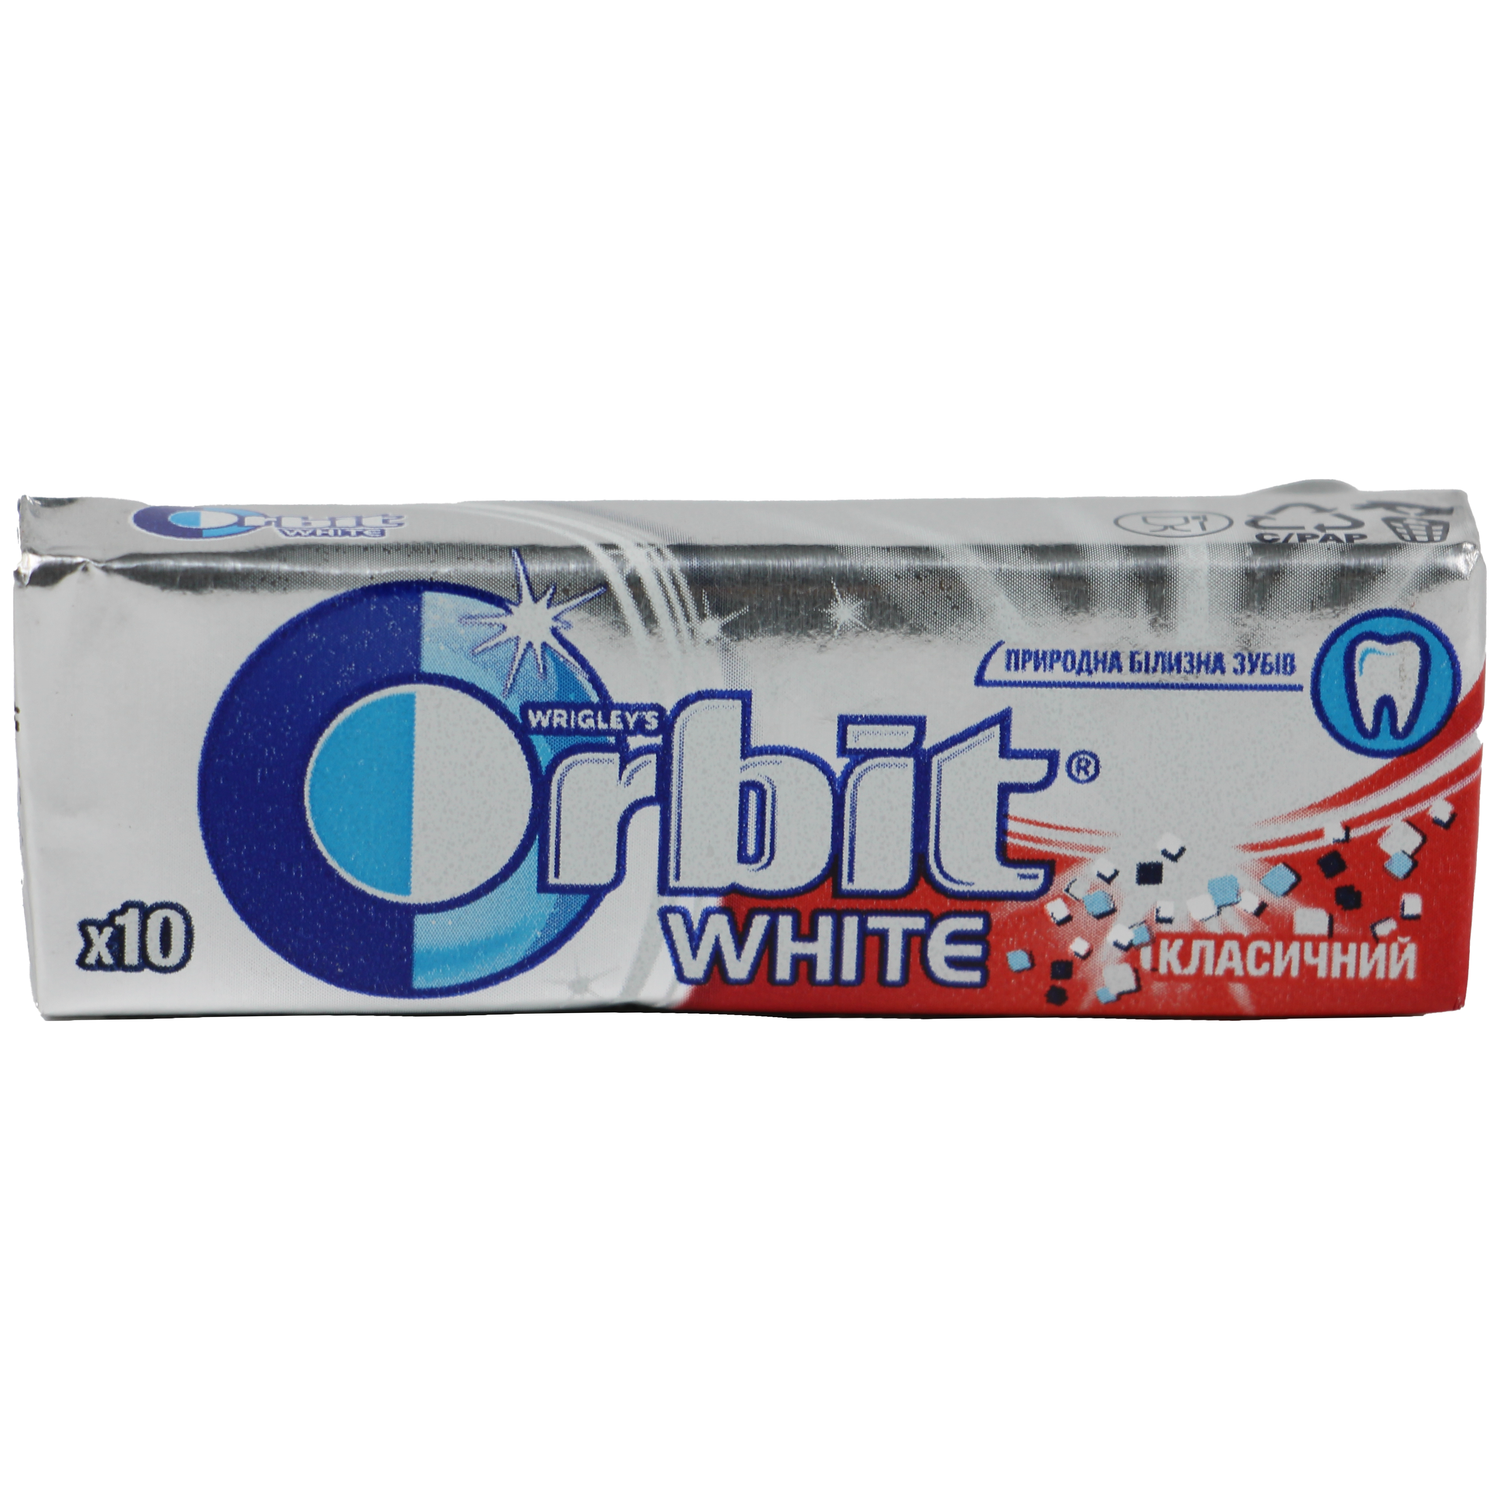 Orbit White with Mint Flavor Chewing Gum 14g